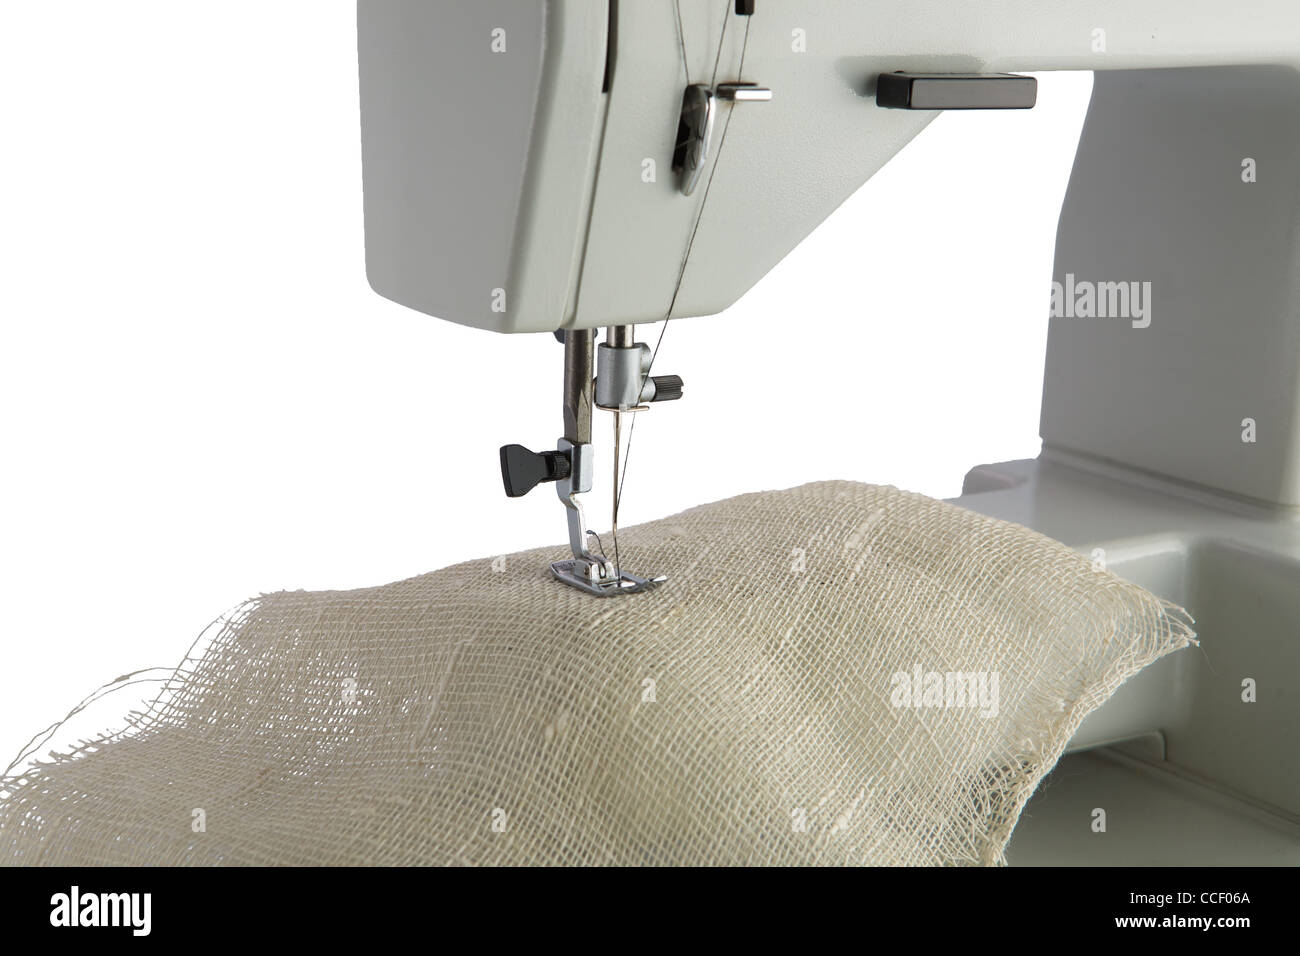 Sewing machine Stock Photo